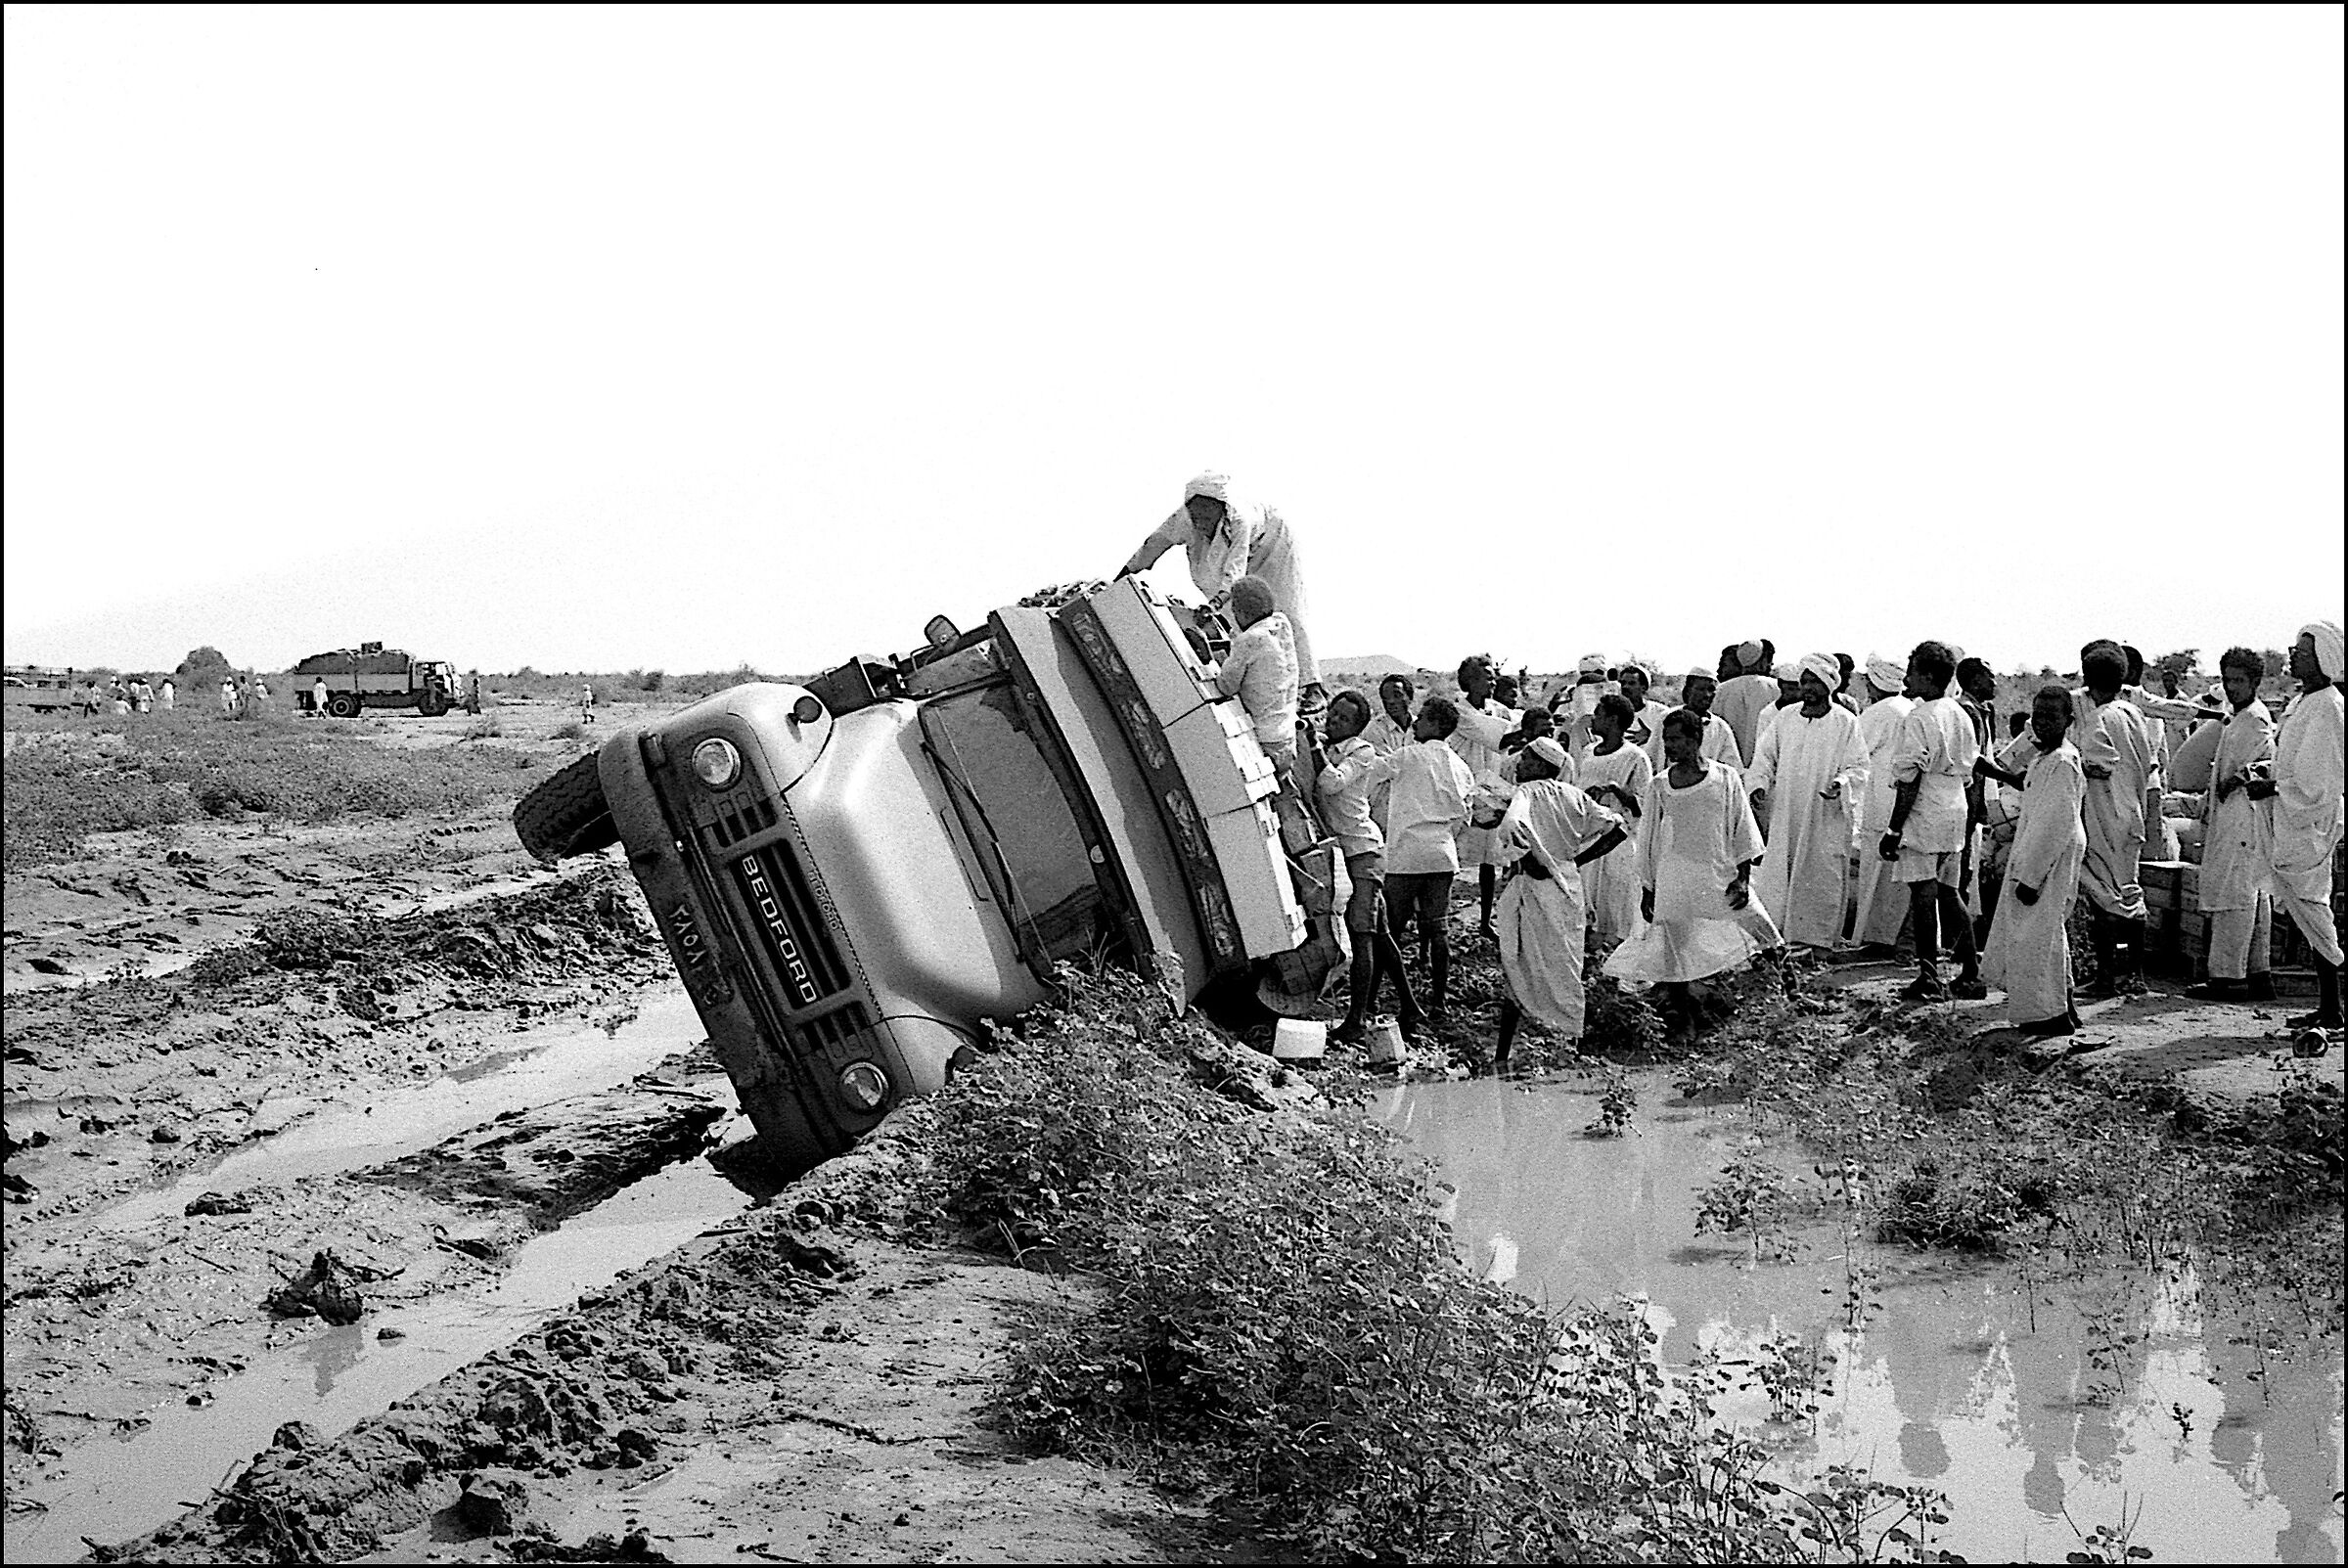 1984 - Sudan "traveling south"...